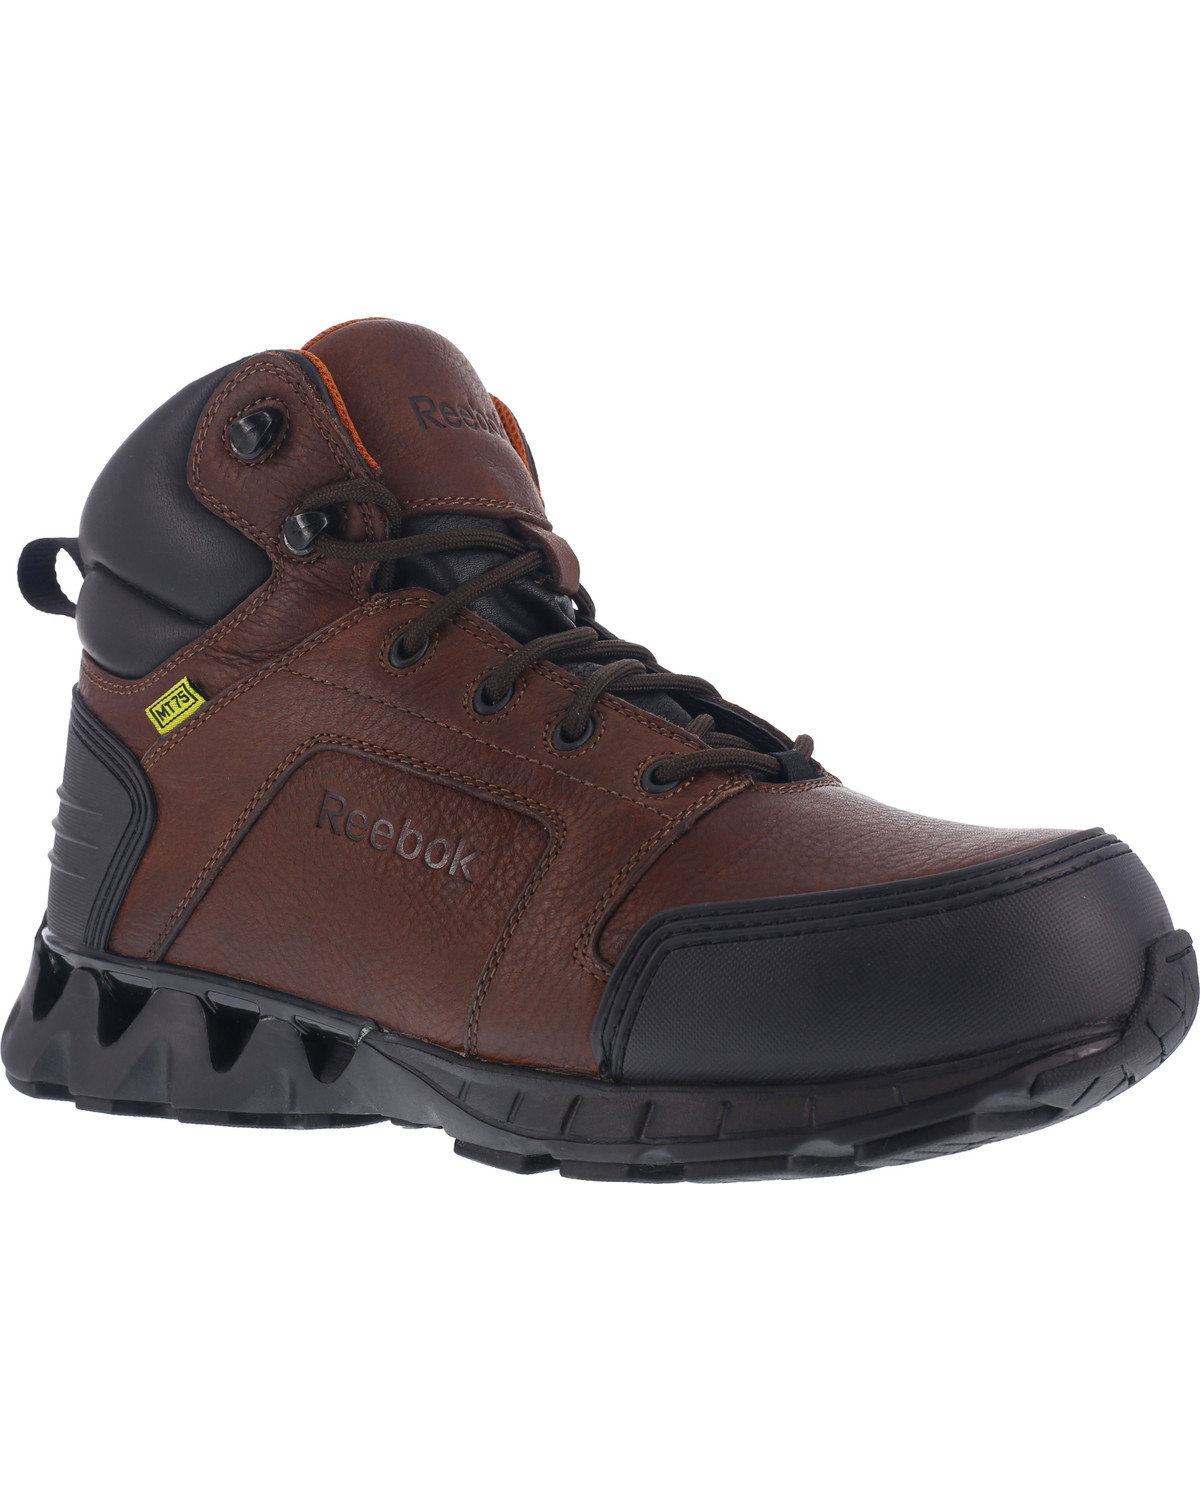 Reebok Men's Athletic 6" Met Guard Hiker Shoes - Carbon Toe